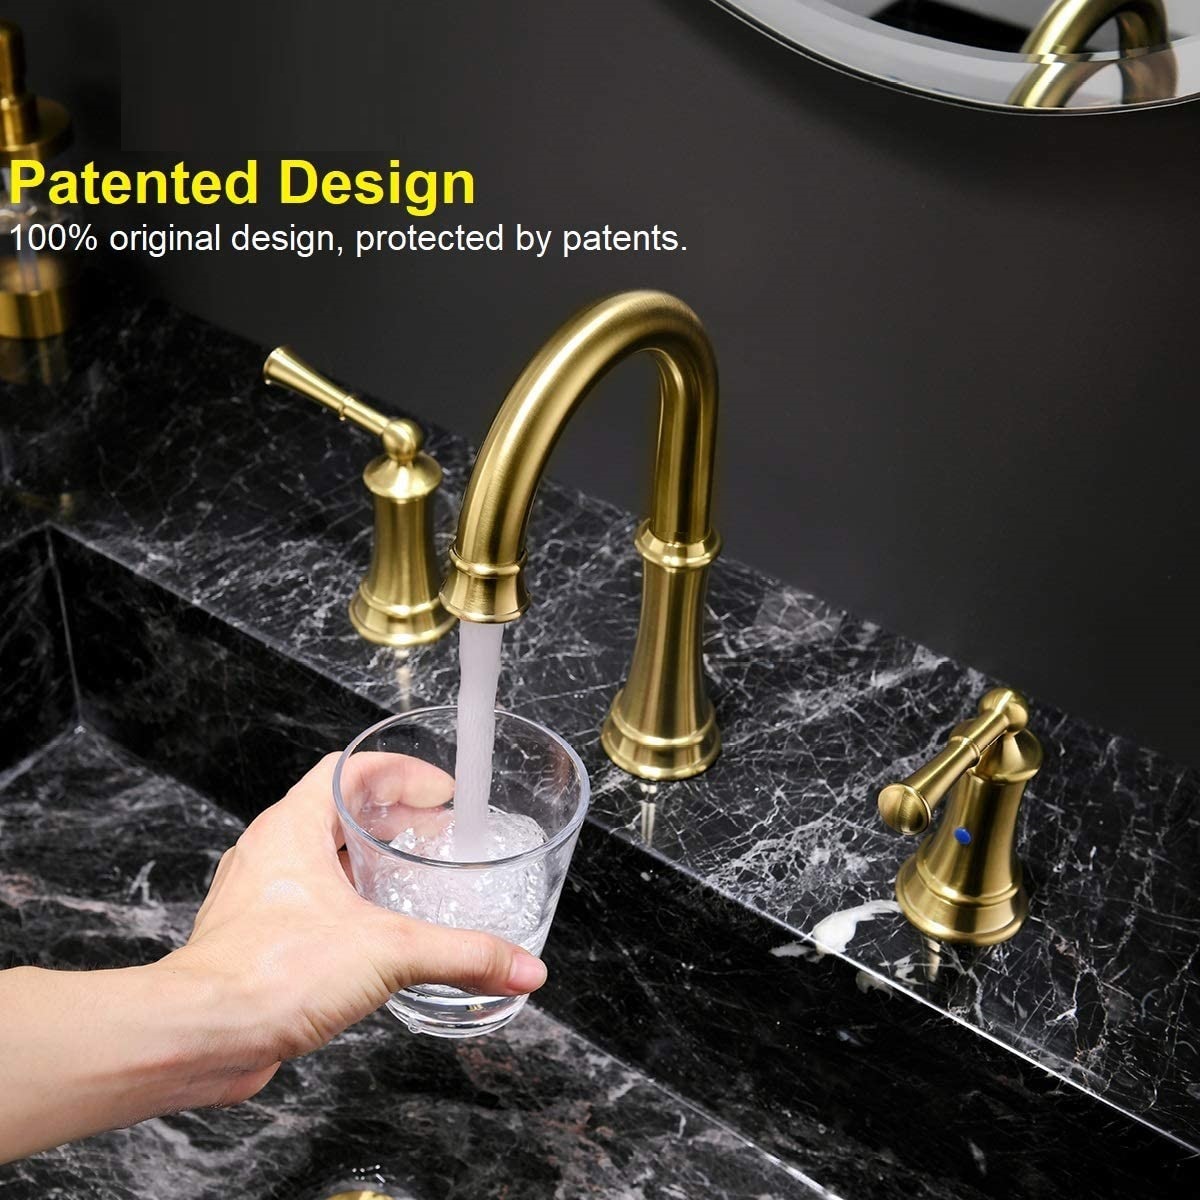 3 Hole Classic Basin Faucet Gold Color Bathroom Faucets Wash Basin Faucet For Bathroom